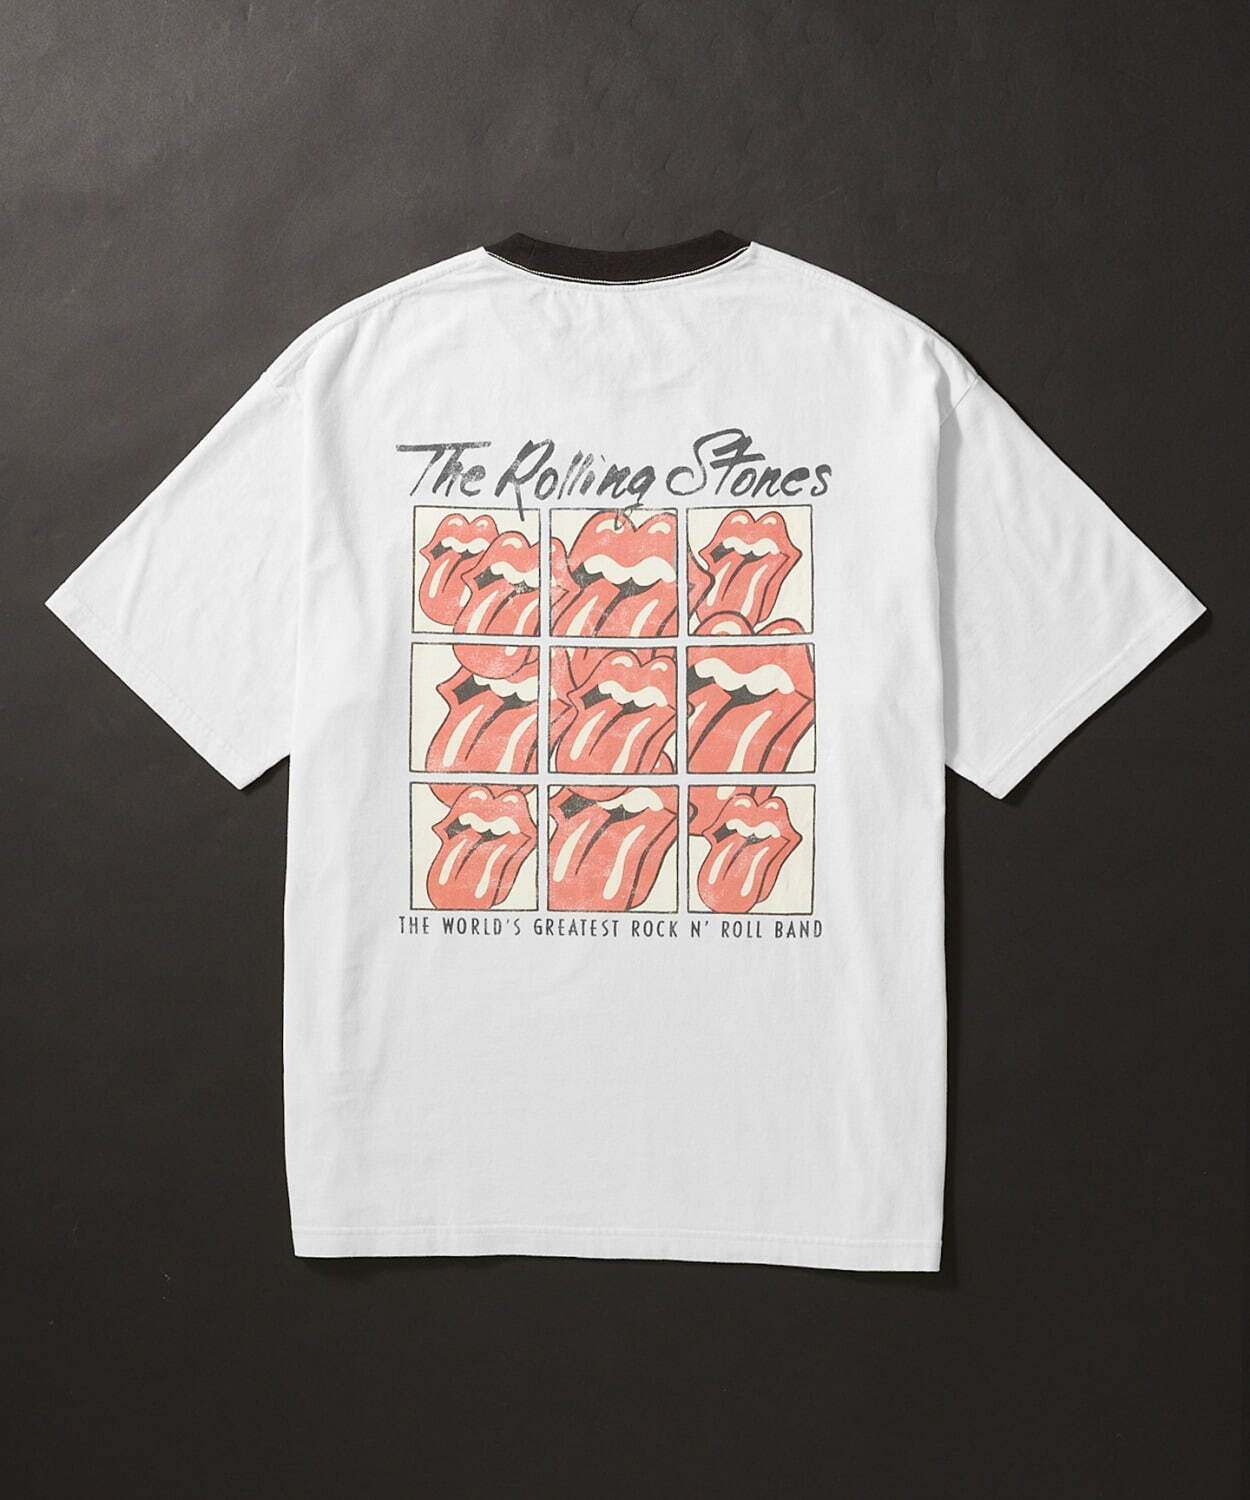 Tシャツ(M、L) 各6,930円